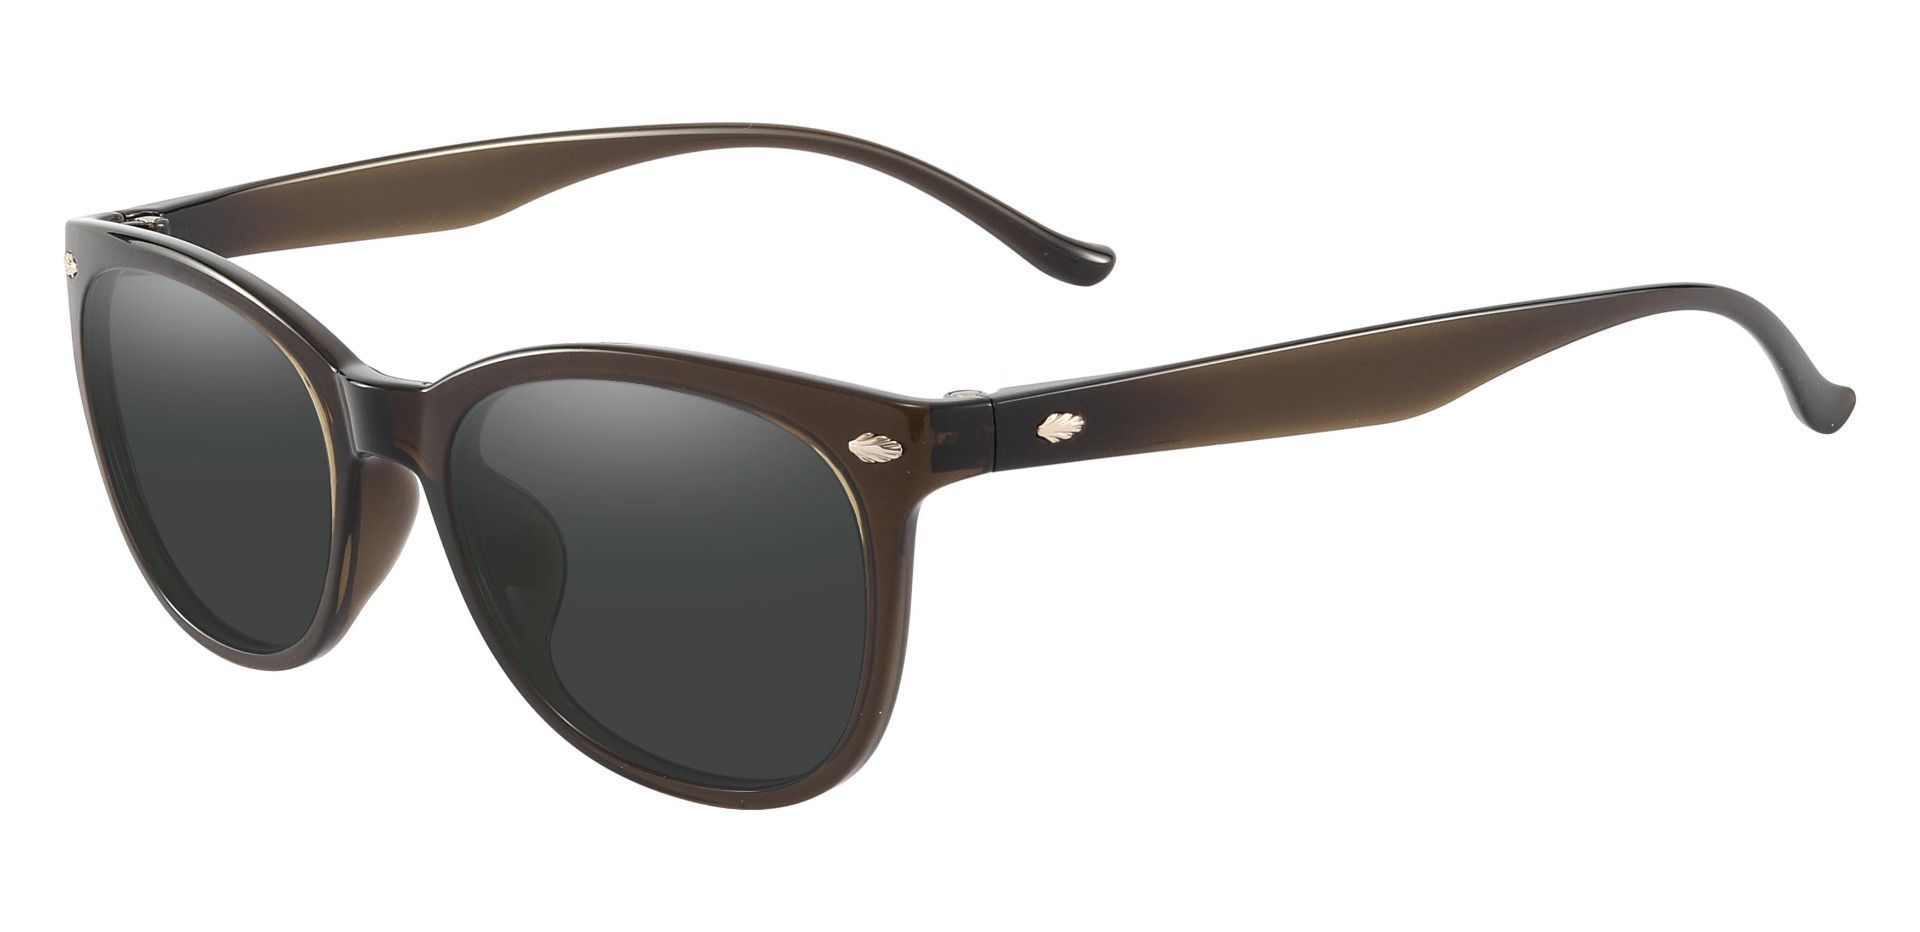 Pavilion Square Progressive Sunglasses - Brown Frame With Gray Lenses